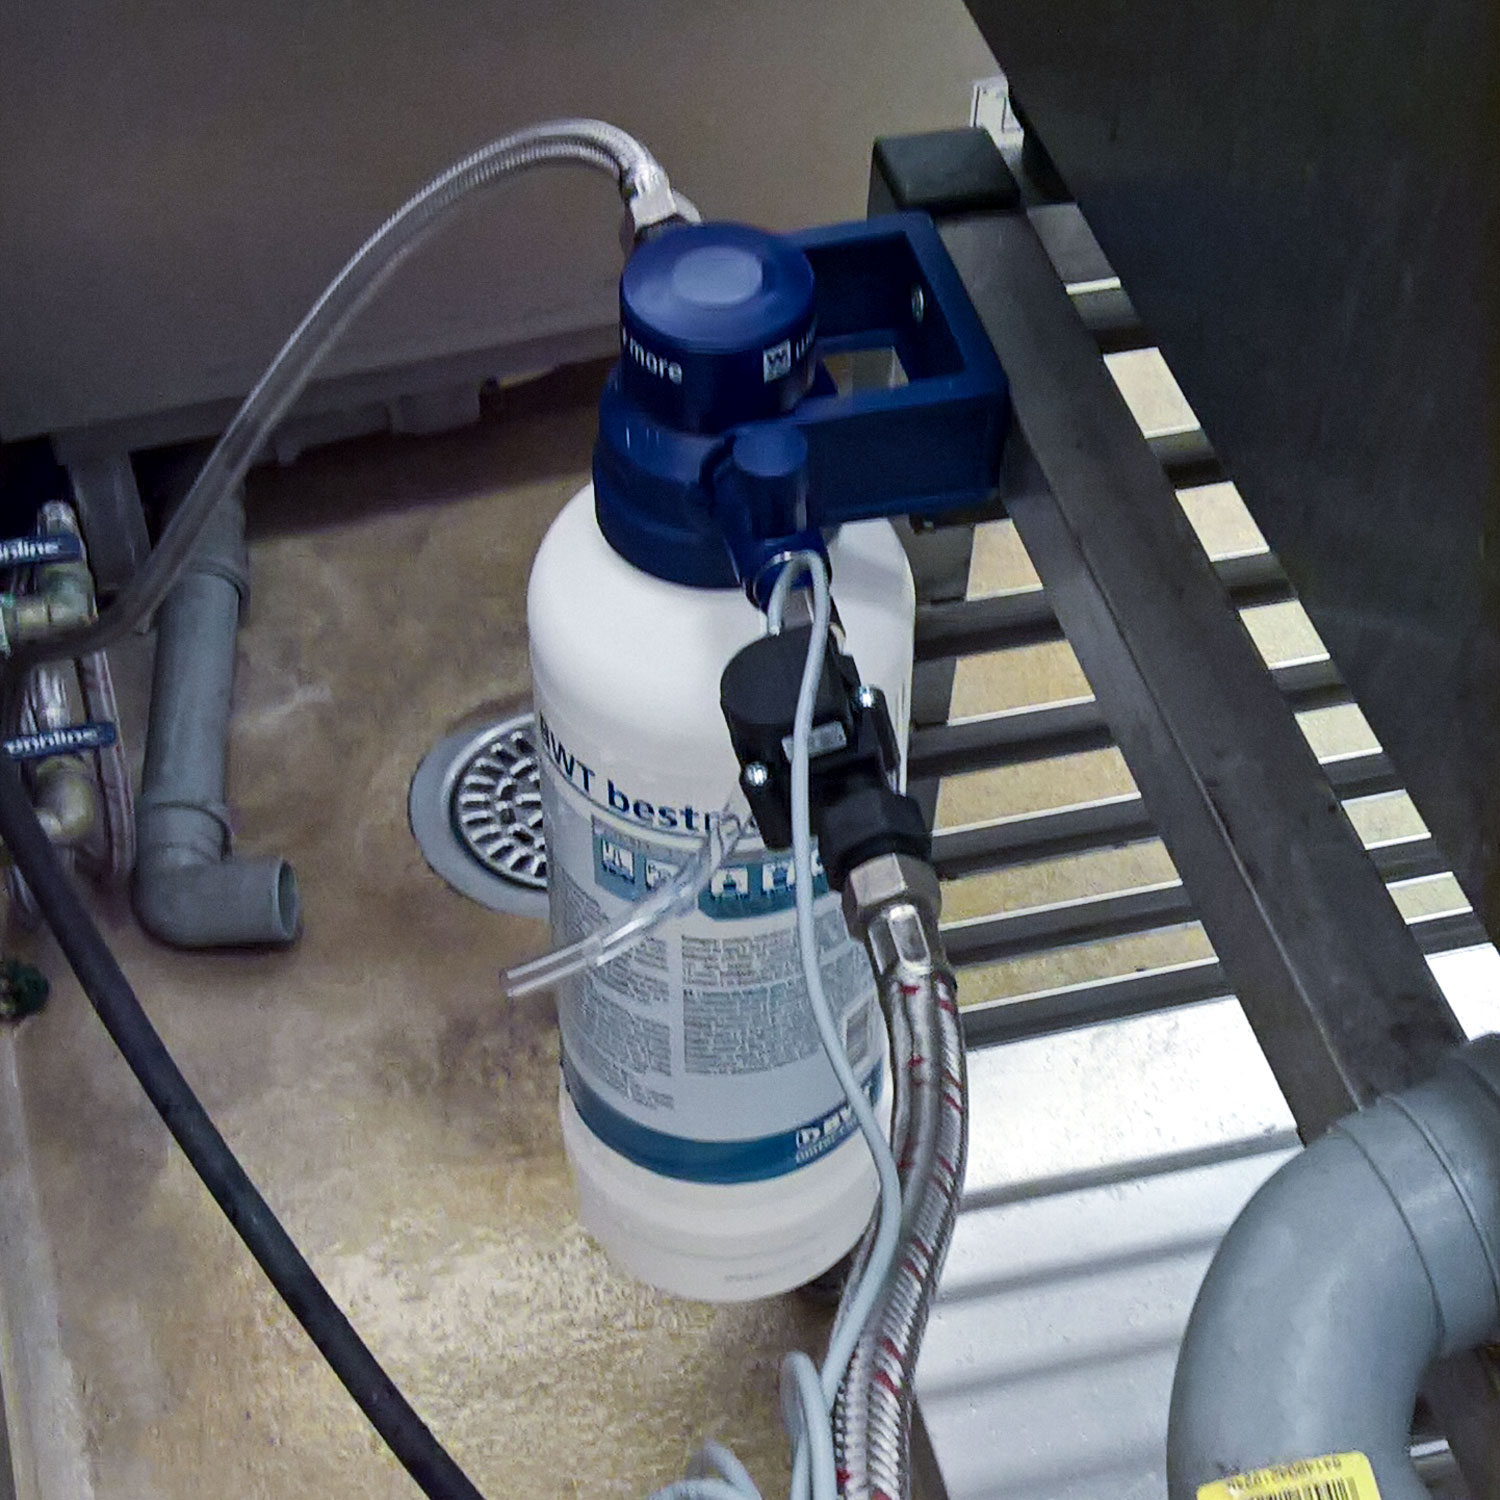 Water softener for hood type dishwashers